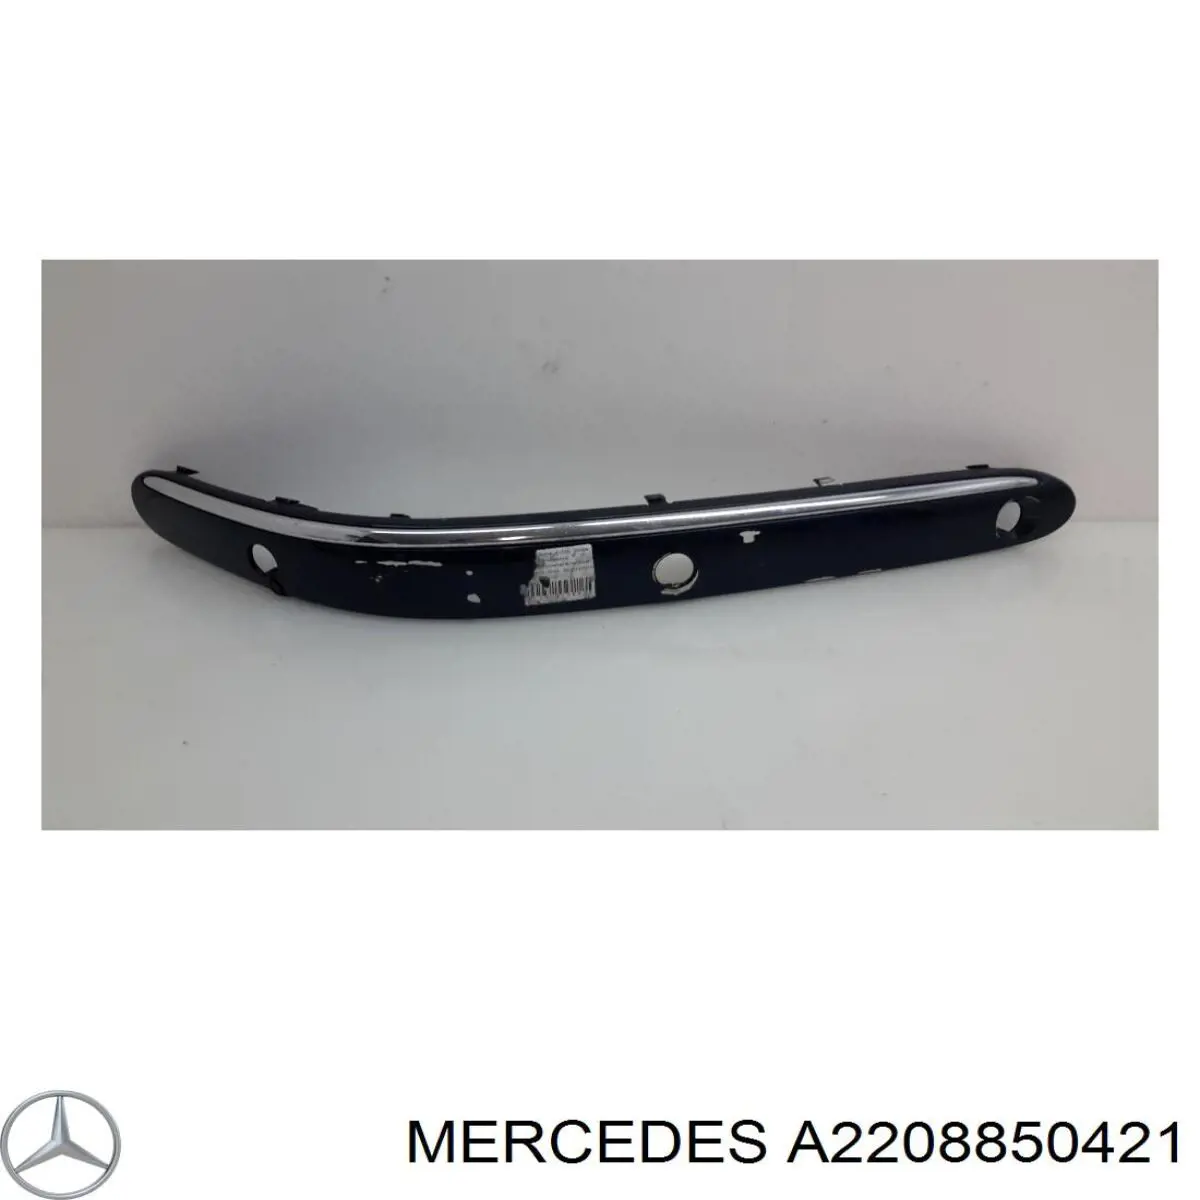 A2208850421 Mercedes moldura de parachoques delantero derecho